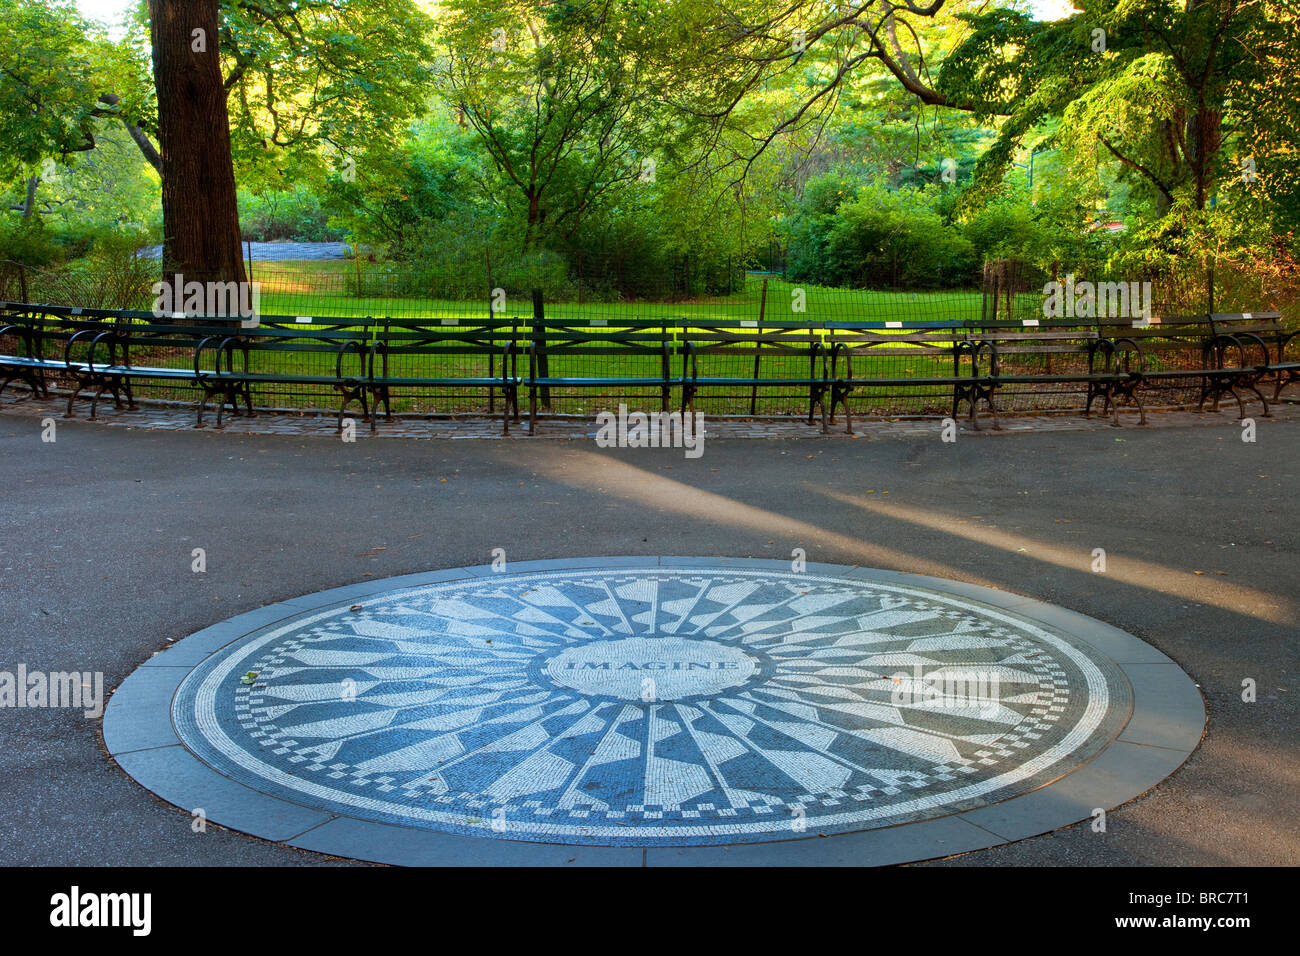 Am frühen Morgen auf dem John Lennon "Imagine" Denkmal in Strawberry Fields im Central Park in New York City, USA Stockfoto